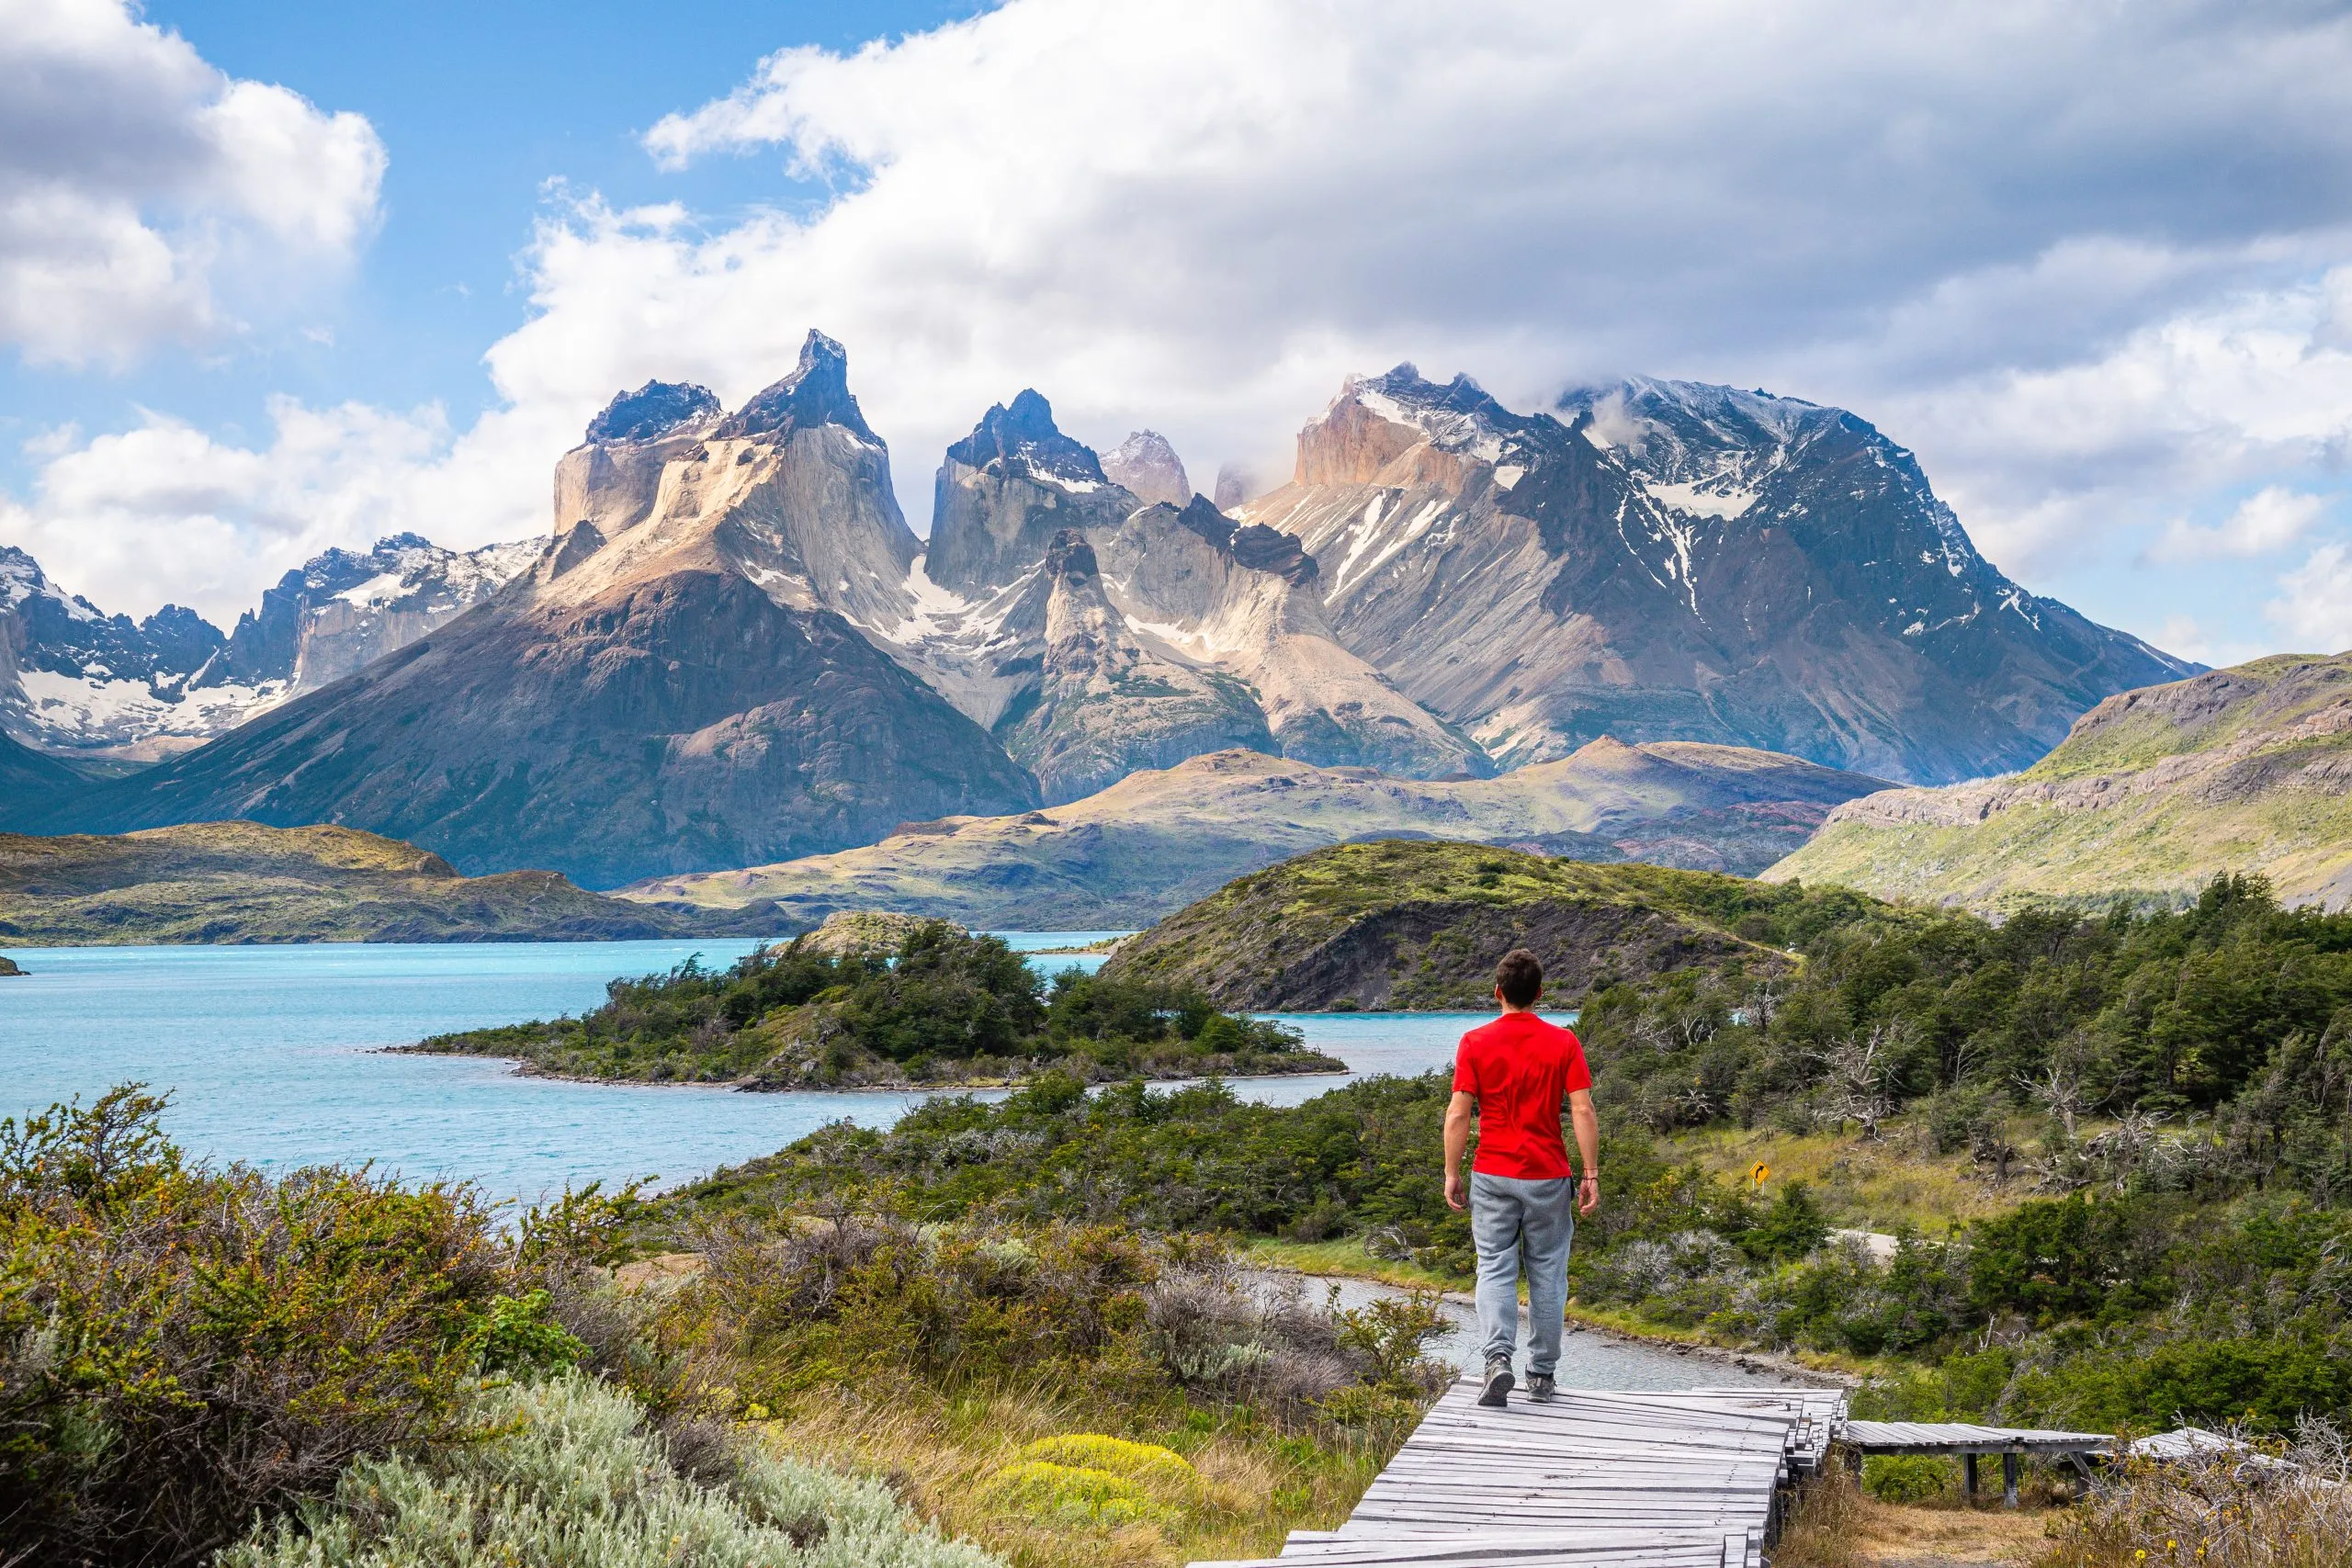 Begin your Patagonian adventure